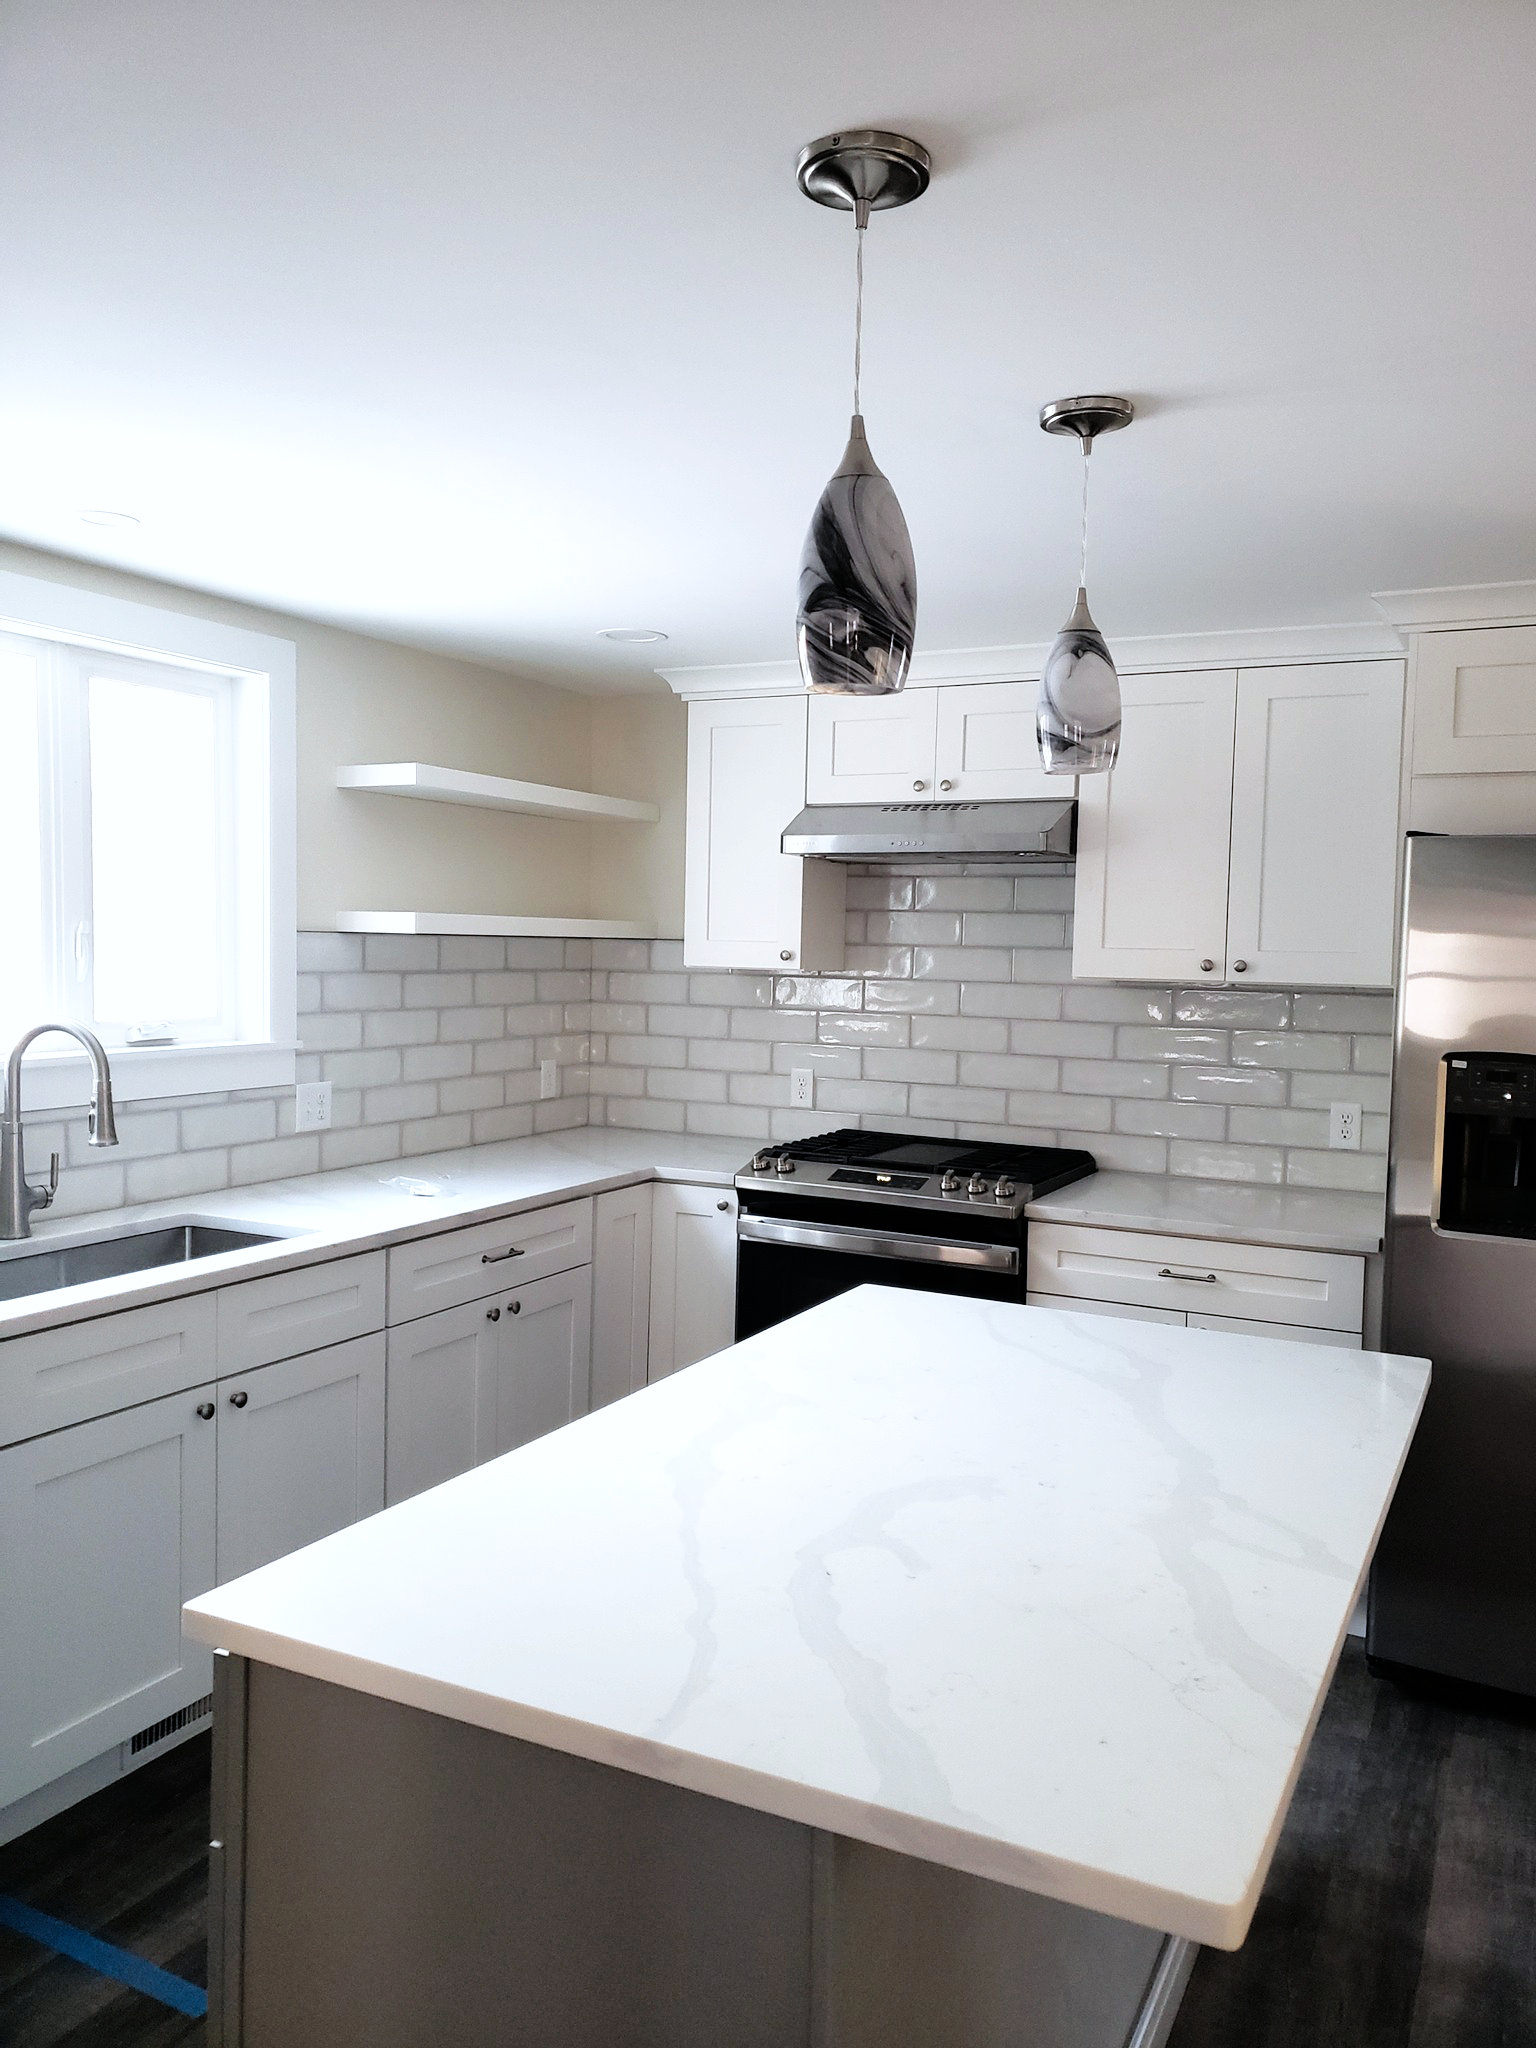 White kitchen cabinets with new granite island and backsplash